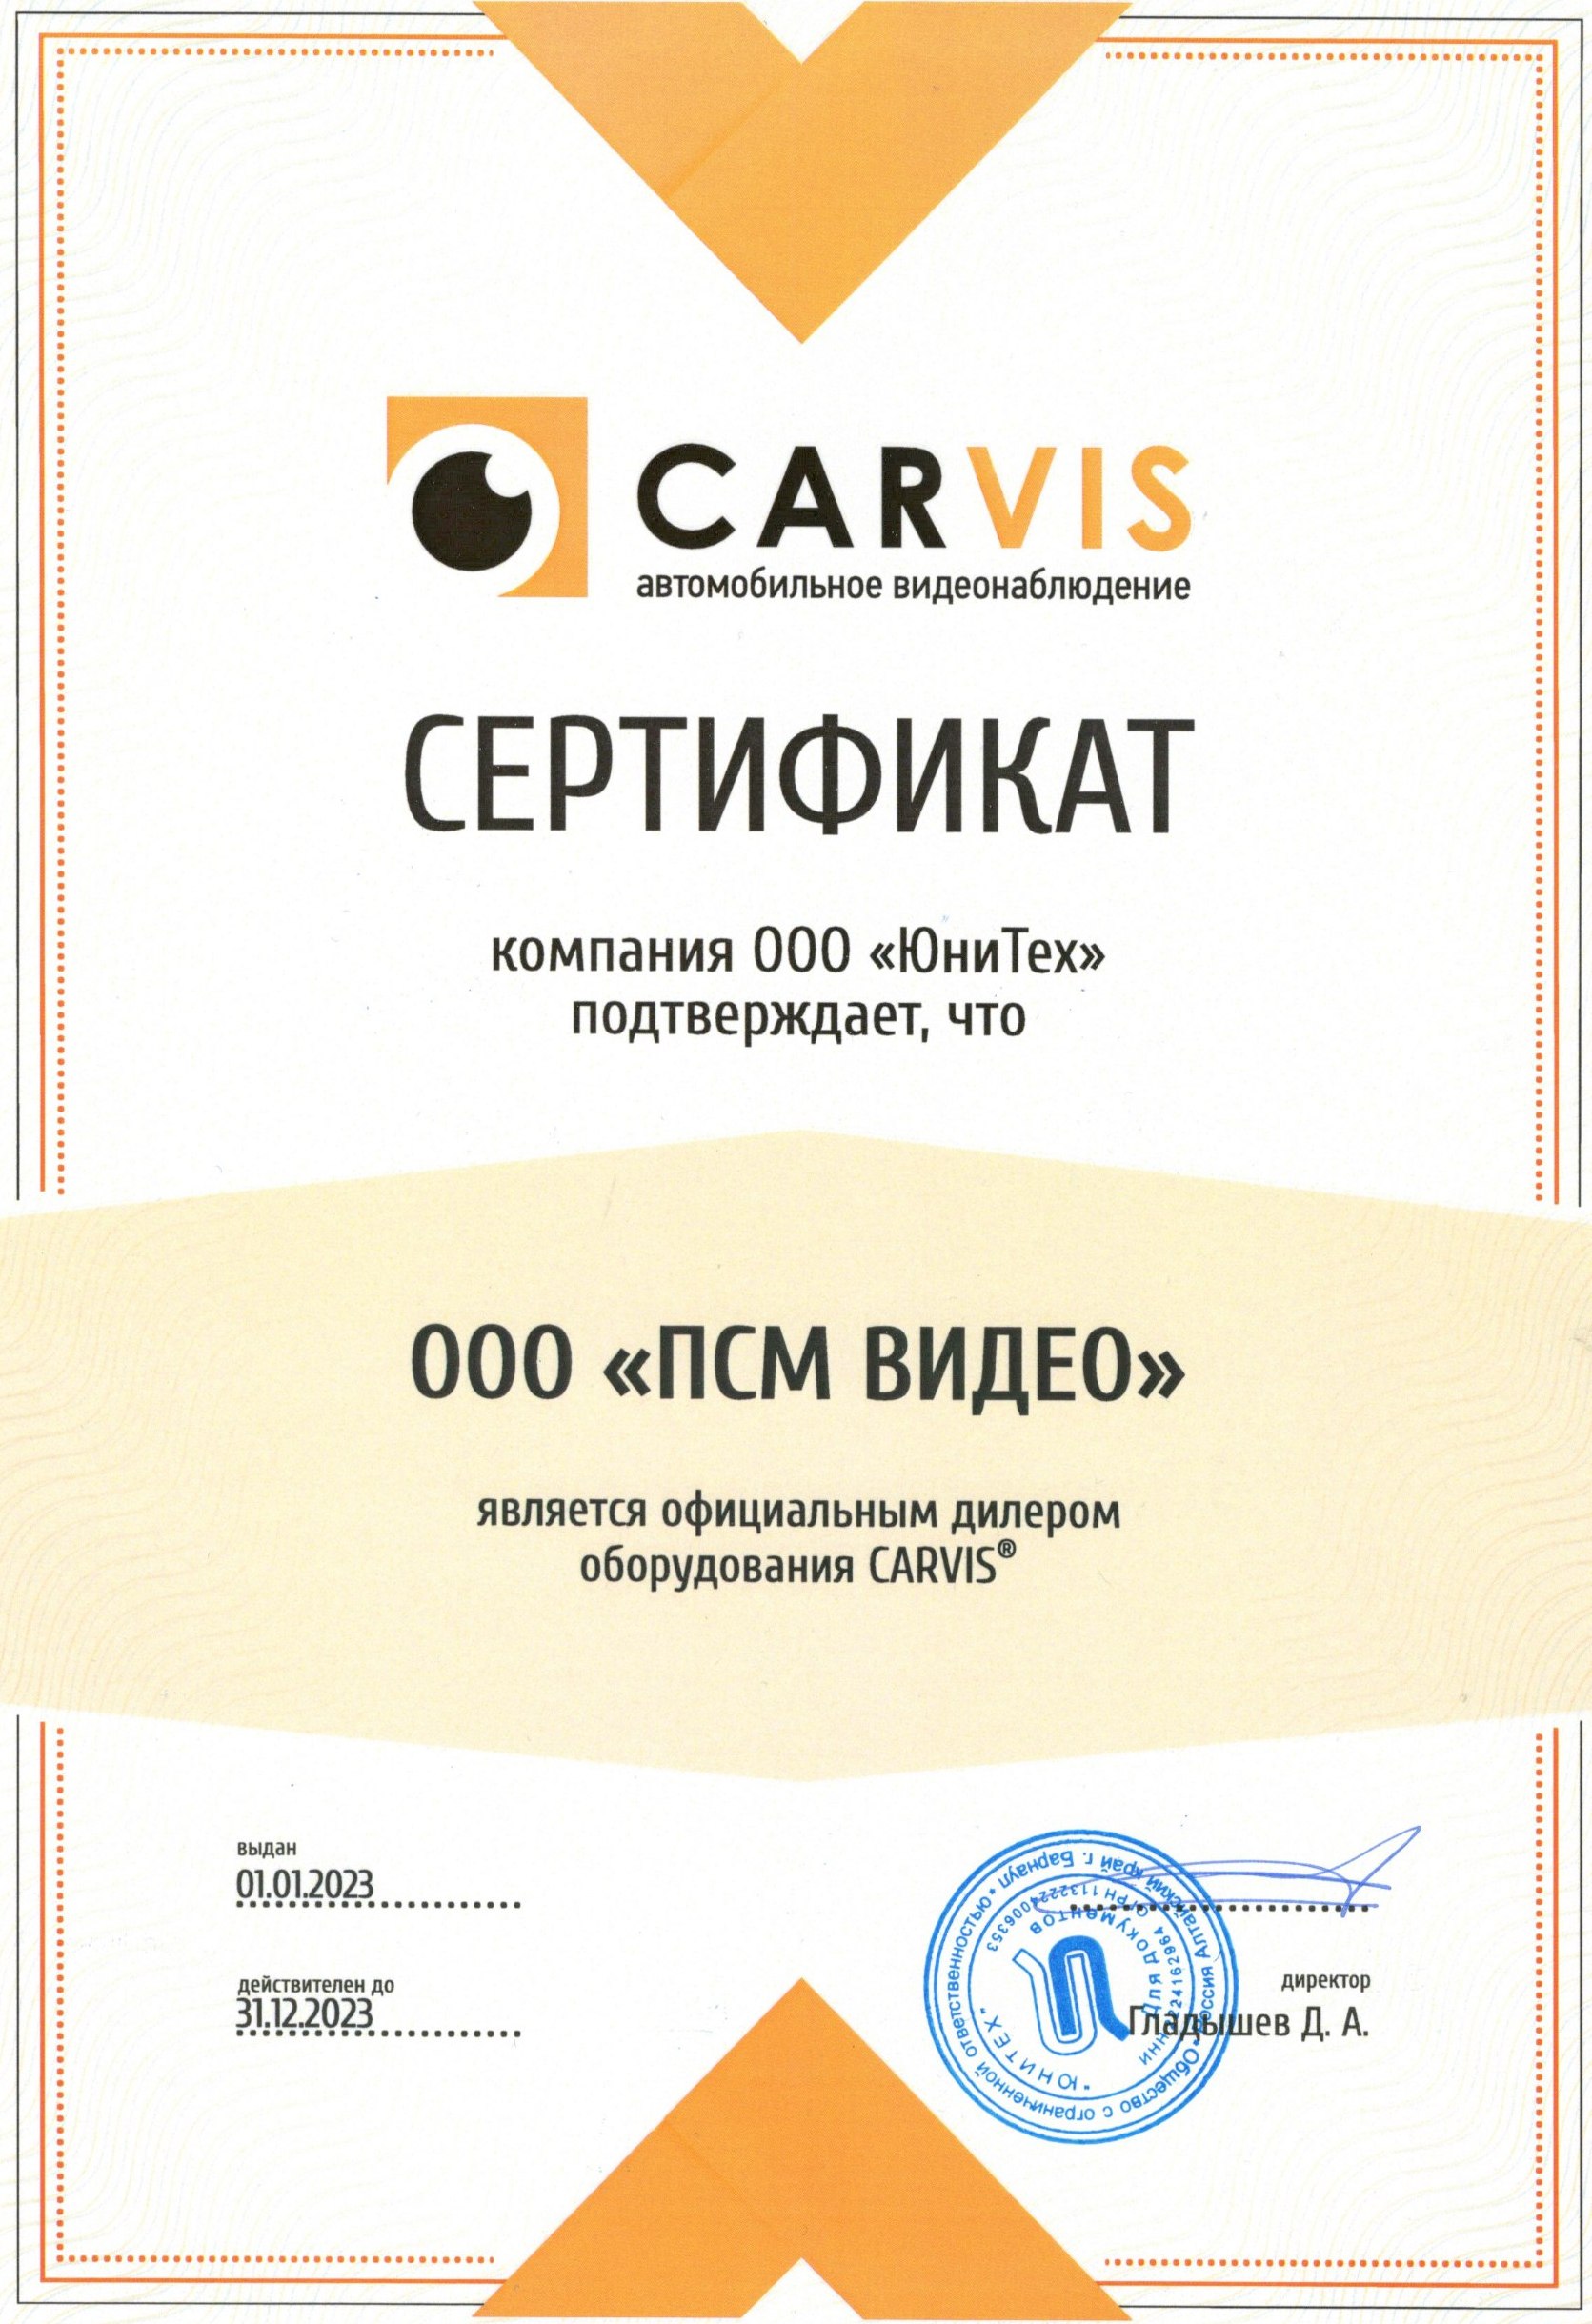 Сертификат Carvis